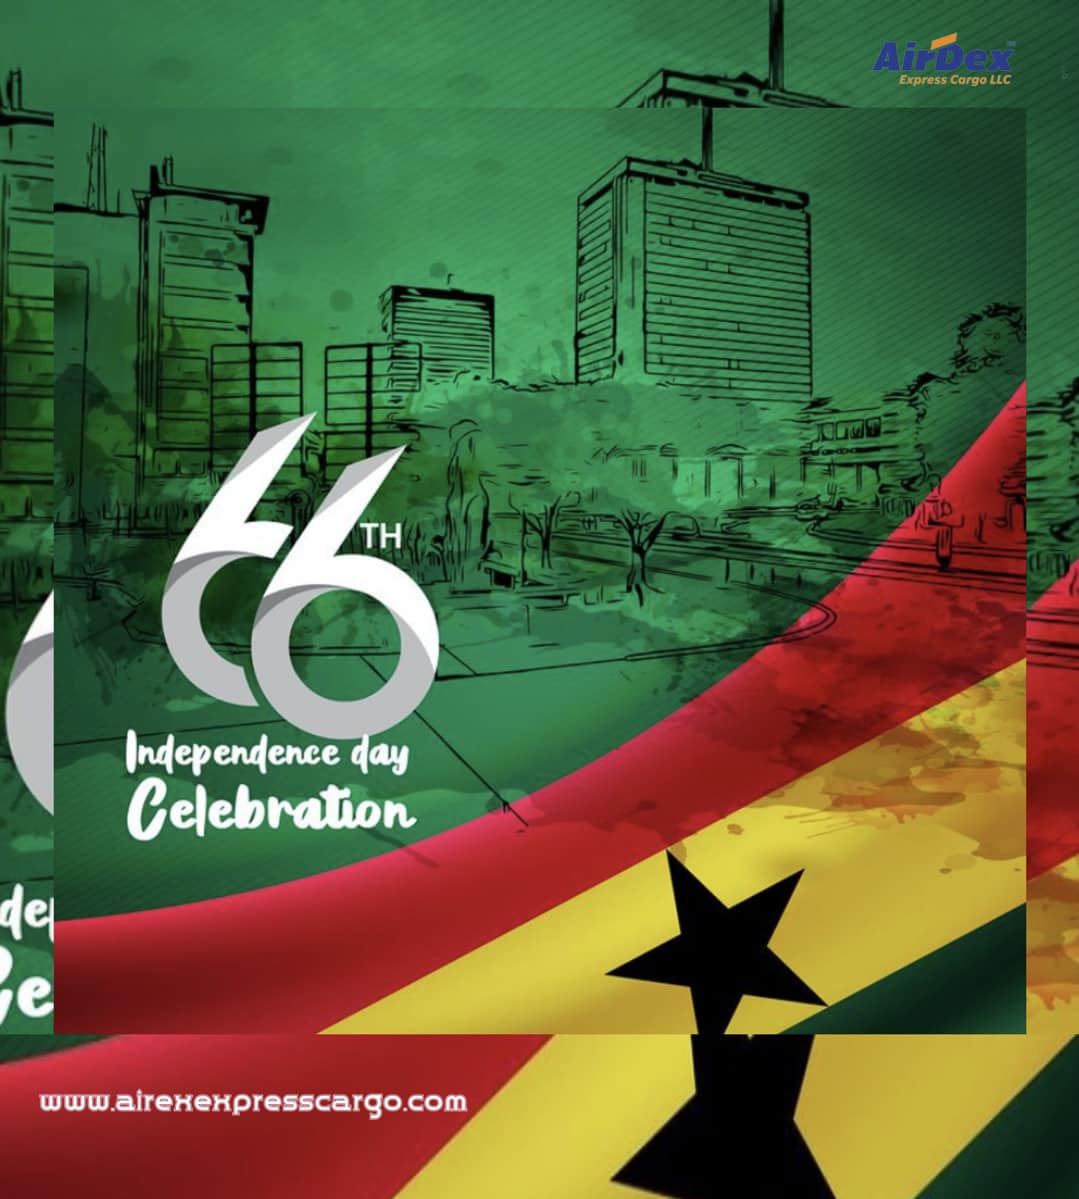 AirDex Wishes All Ghanaians a Happy Independence ❤️🇬🇭✌️
#ghana #ghanaindependence #ghanaians #ghanaiansabroad #dubai #cargo #ship #freight #supplychain #carshippingcompany #dubaimarina #dubaiairport #logistics